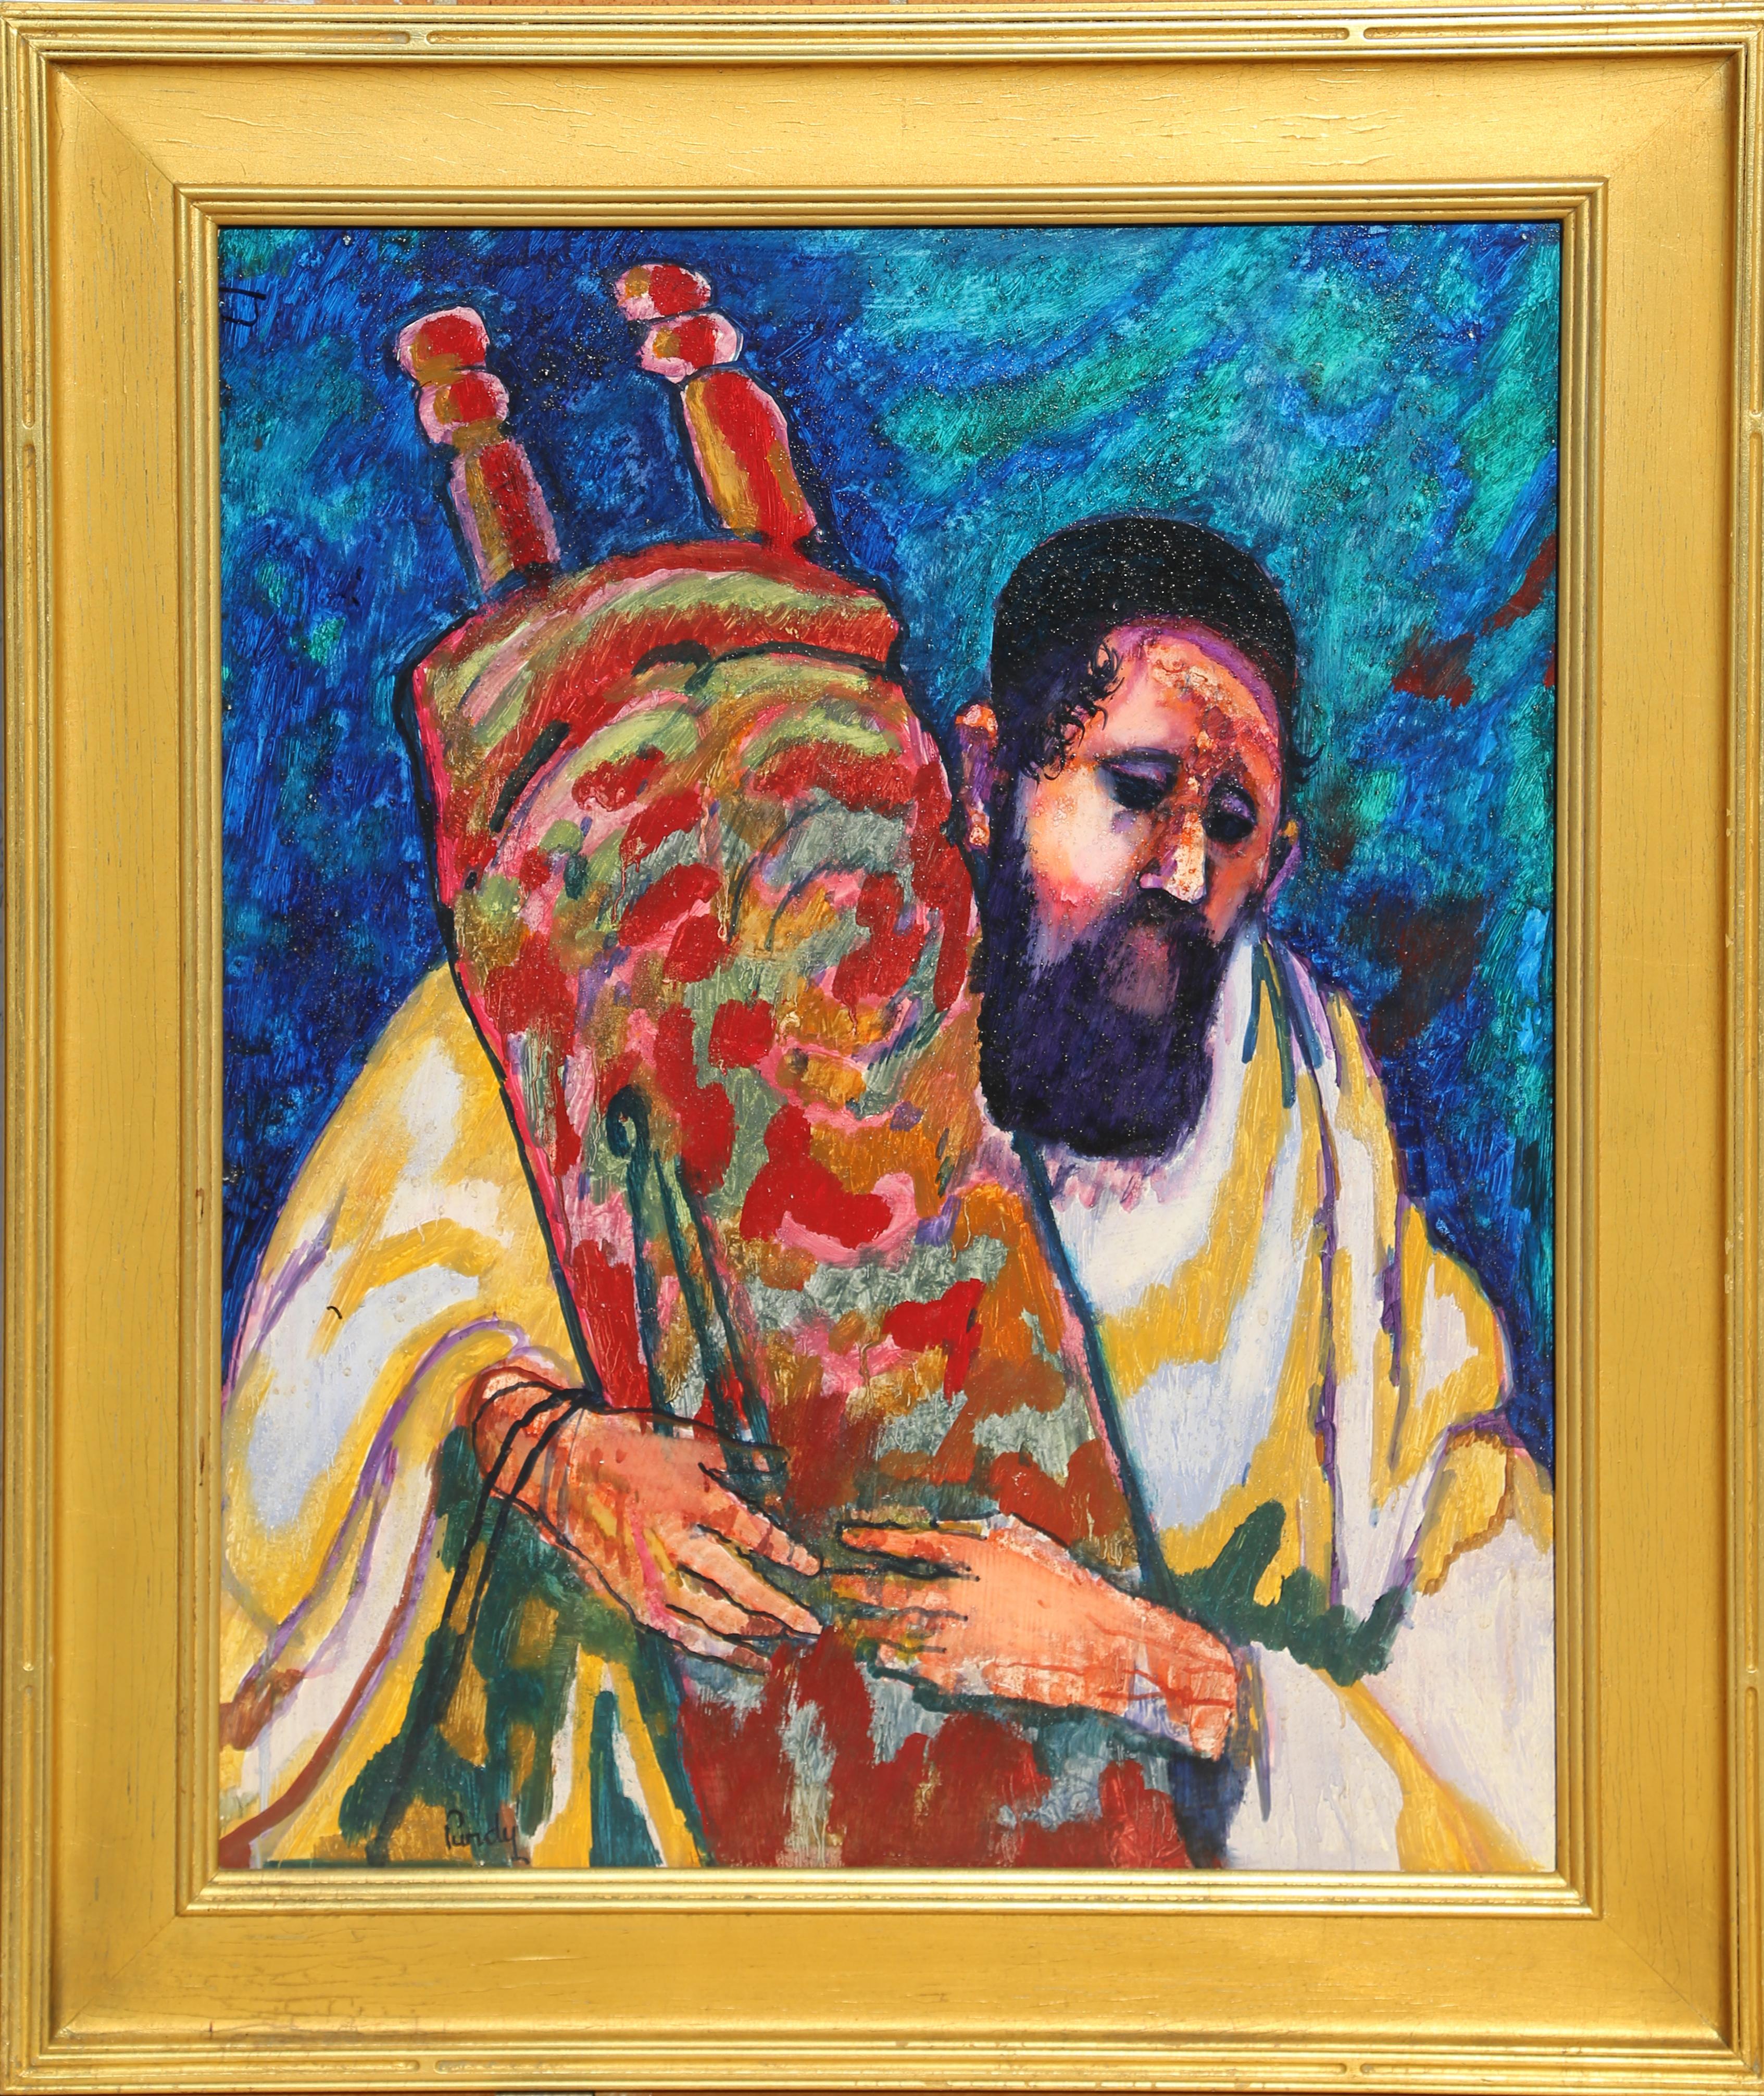 Artist: Donald Roy Purdy, American (1924 - )
Title: Rabbi 3
Year: circa 1970
Medium: Oil on Masonite, signed l.r.
Size: 30 x 24 in. (76.2 x 60.96 cm)
Frame Size: 38 x 31 inches
